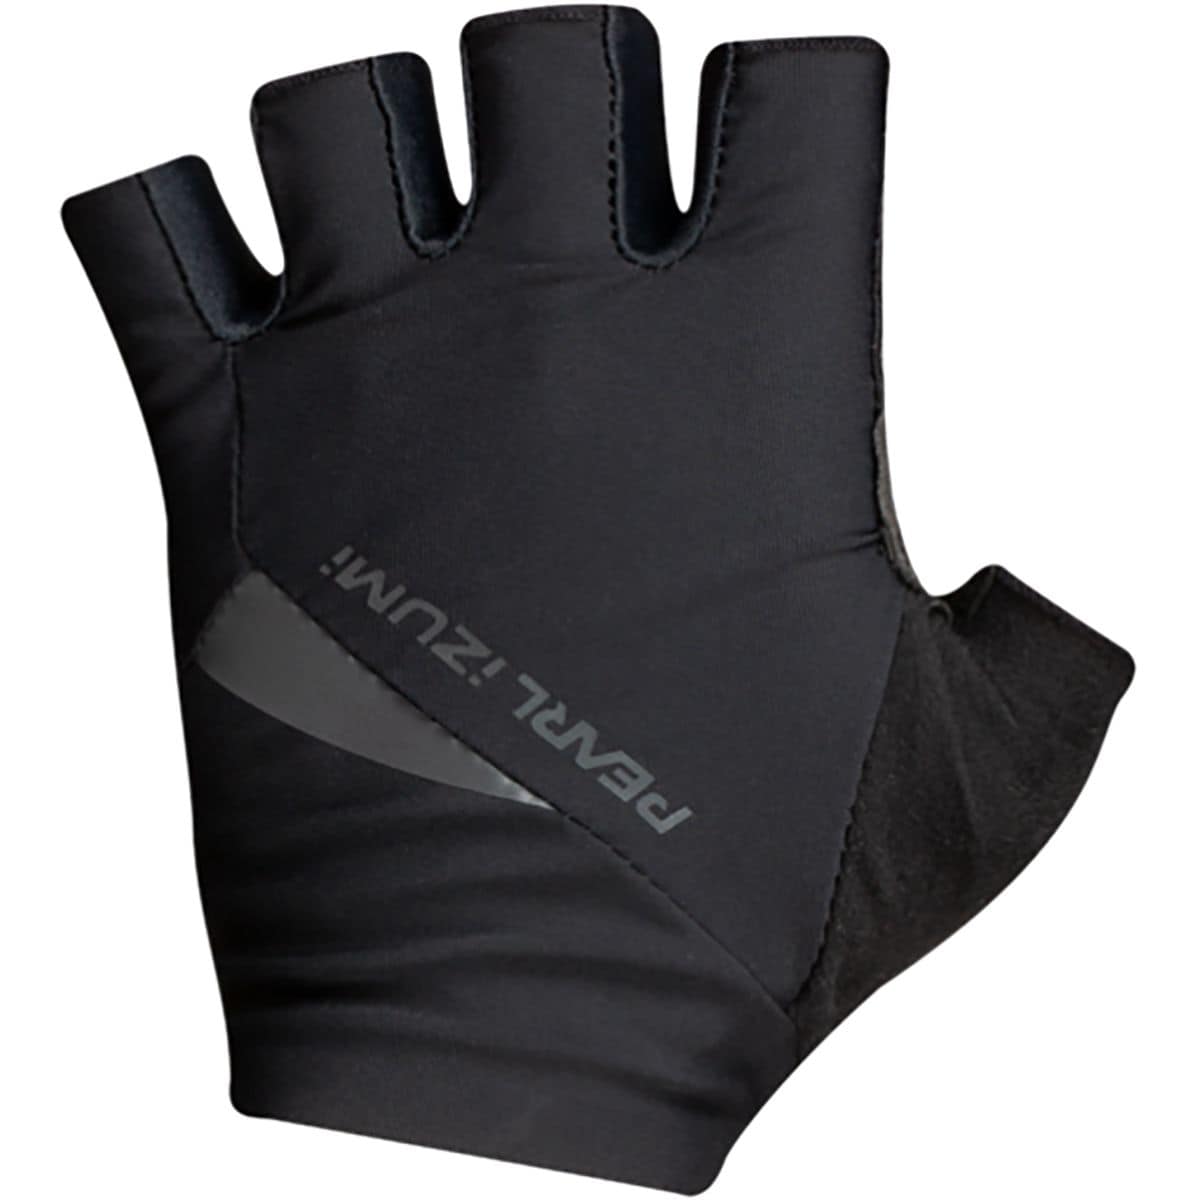 PEARL iZUMi P.R.O. Gel Glove - Women's Black, S